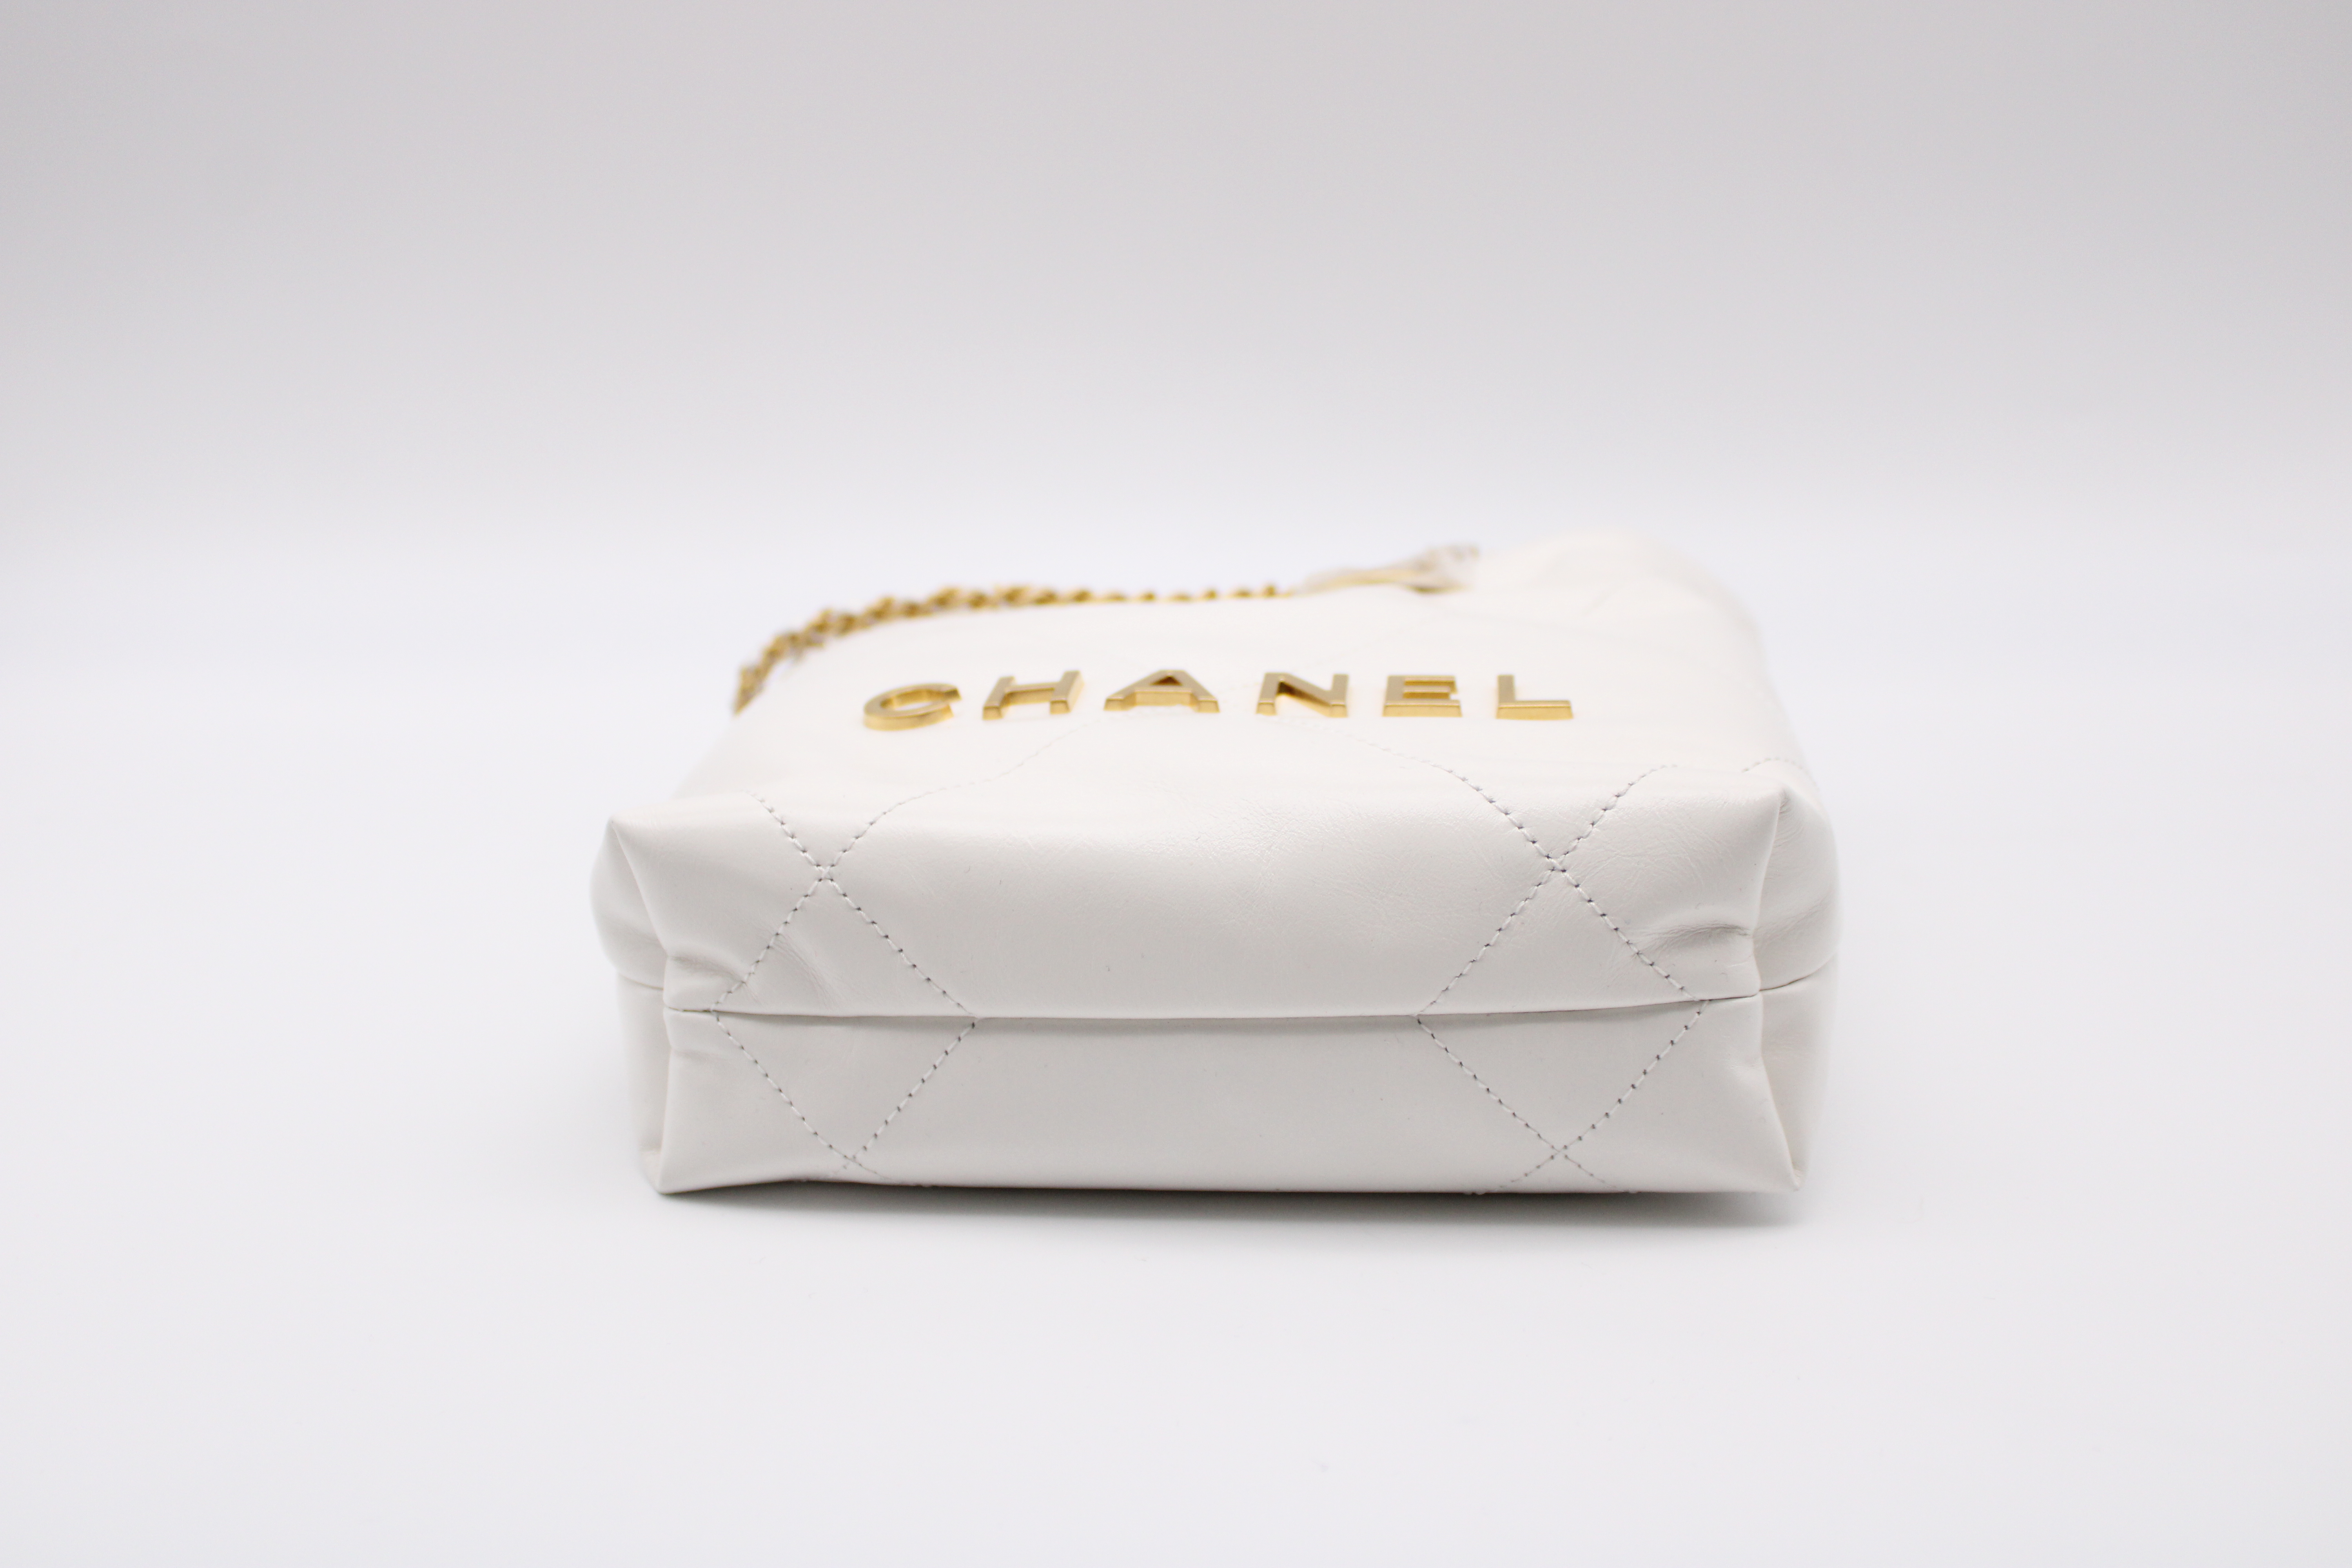 Chanel Small 22 Bag White Calfskin Gold Hardware